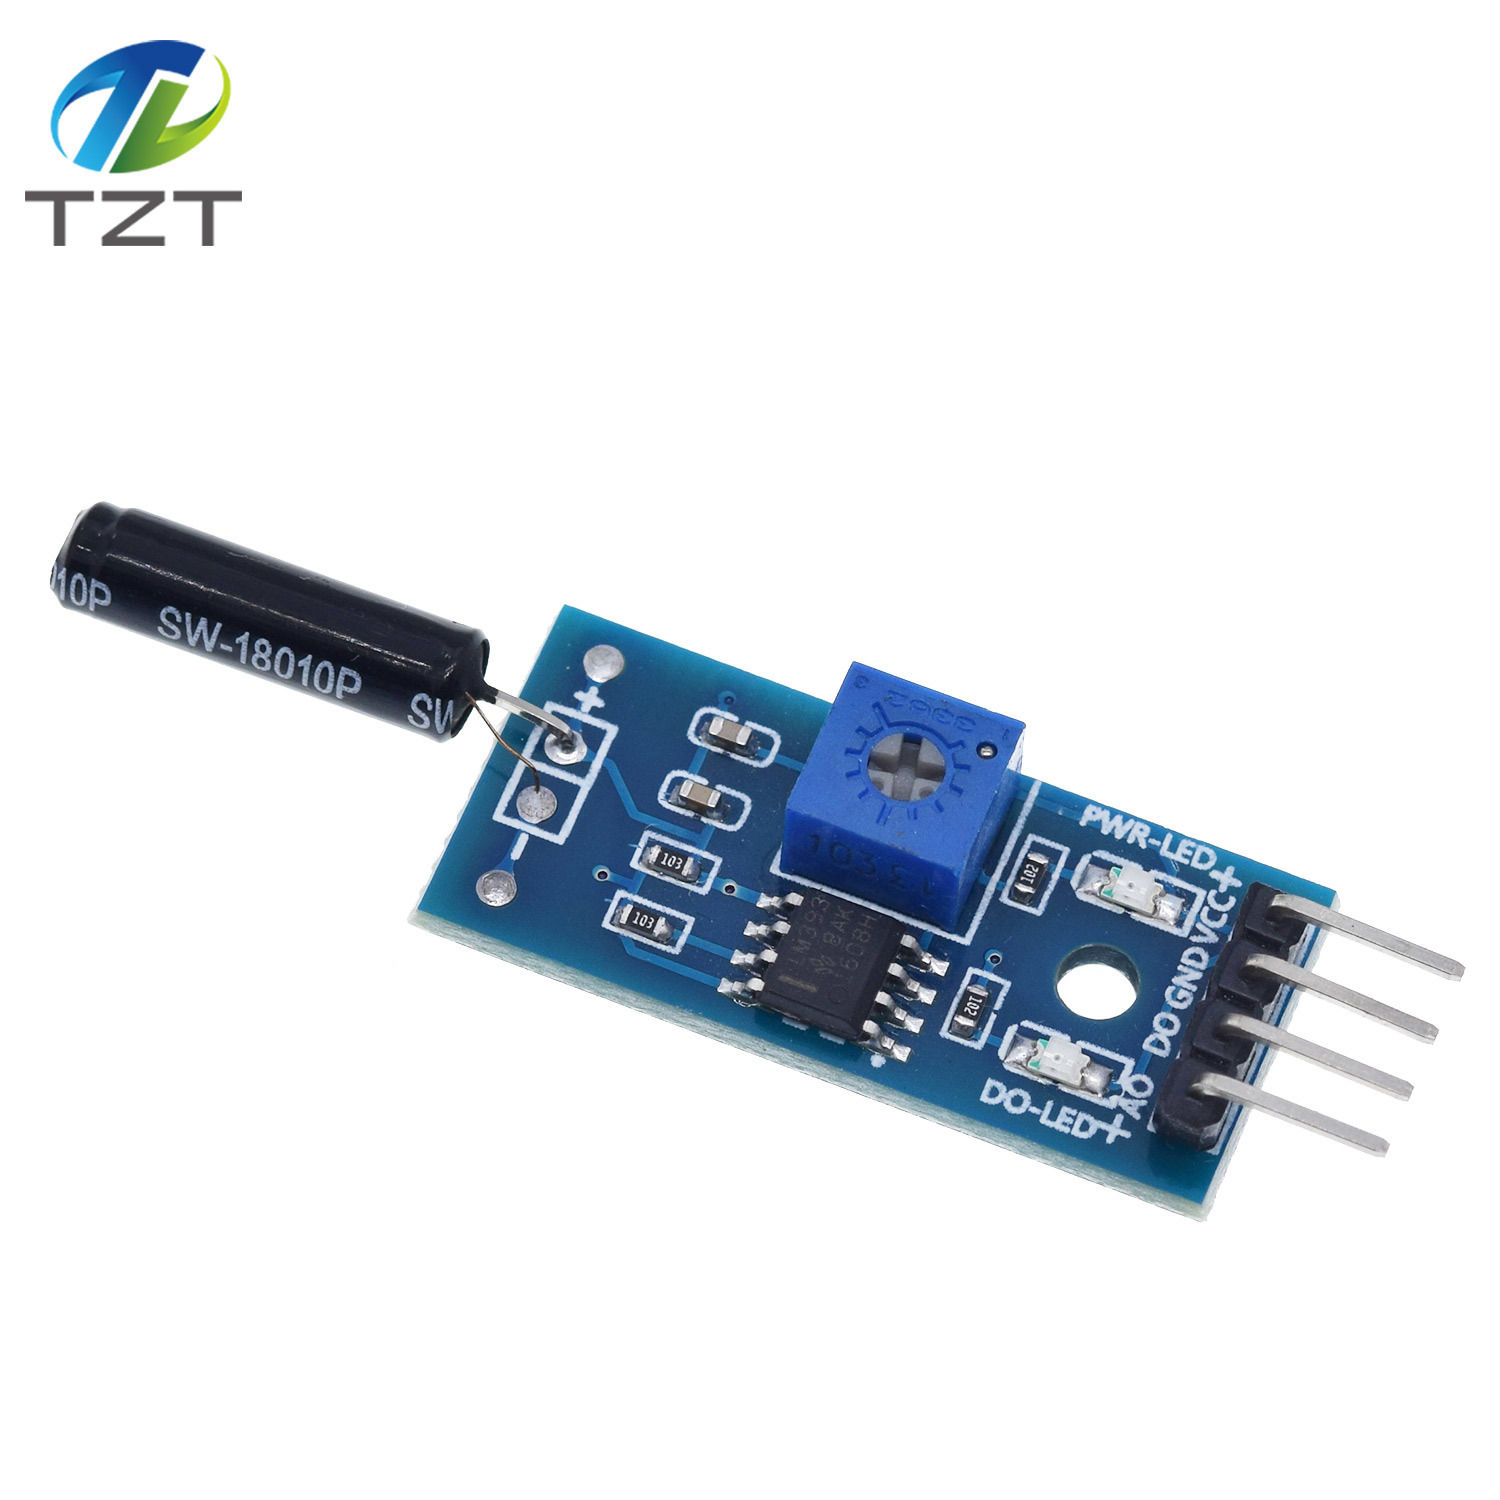 TZT Vibration Sensor Module Normally Opened Type SW18010P Vibration switch alarm sensor module for Arduino